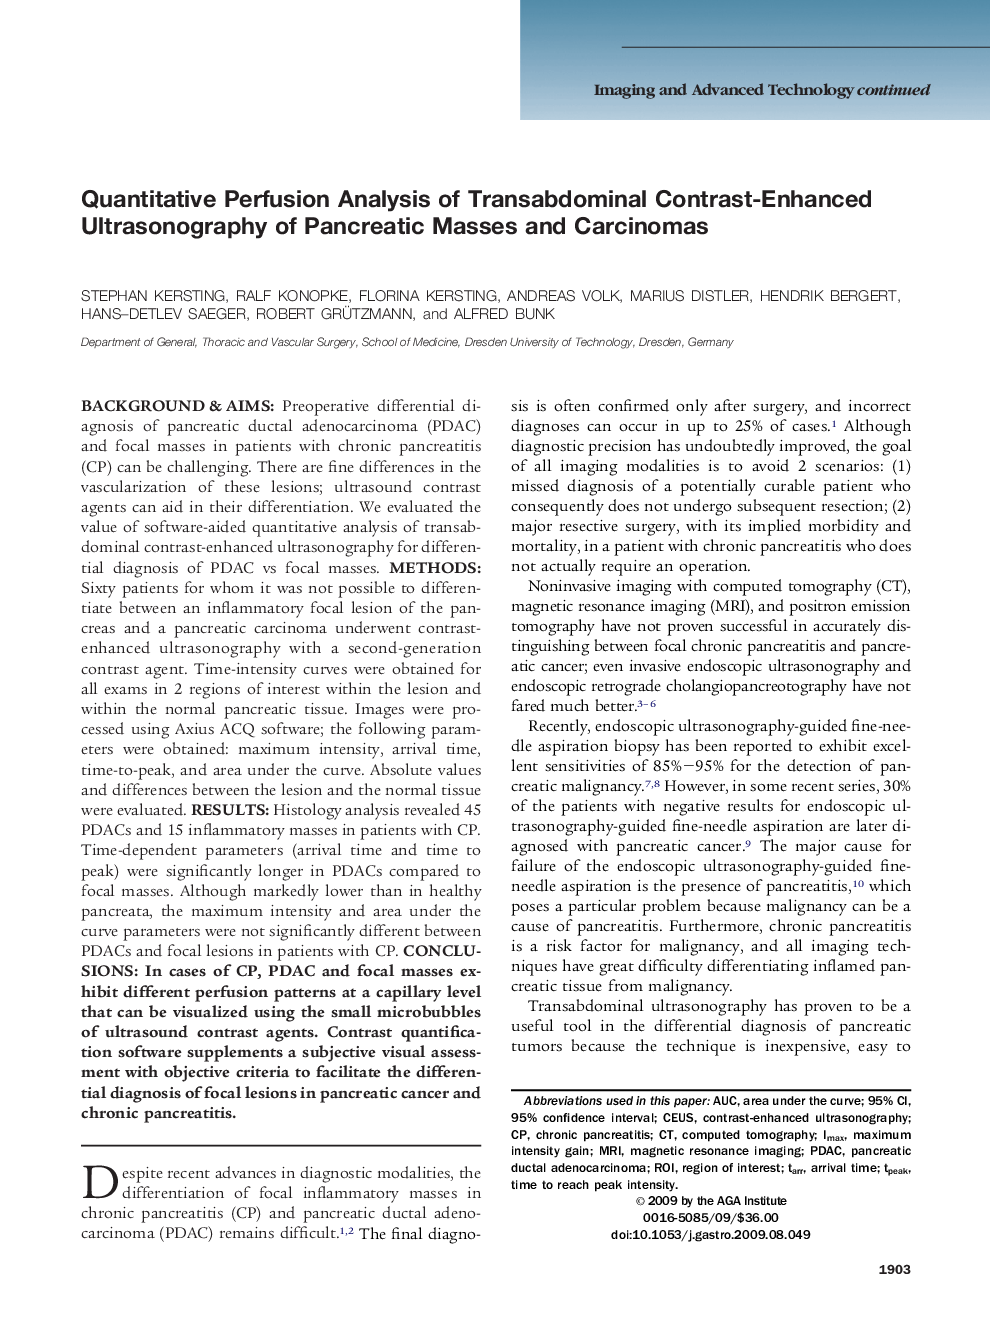 Quantitative Perfusion Analysis of Transabdominal Contrast-Enhanced Ultrasonography of Pancreatic Masses and Carcinomas 